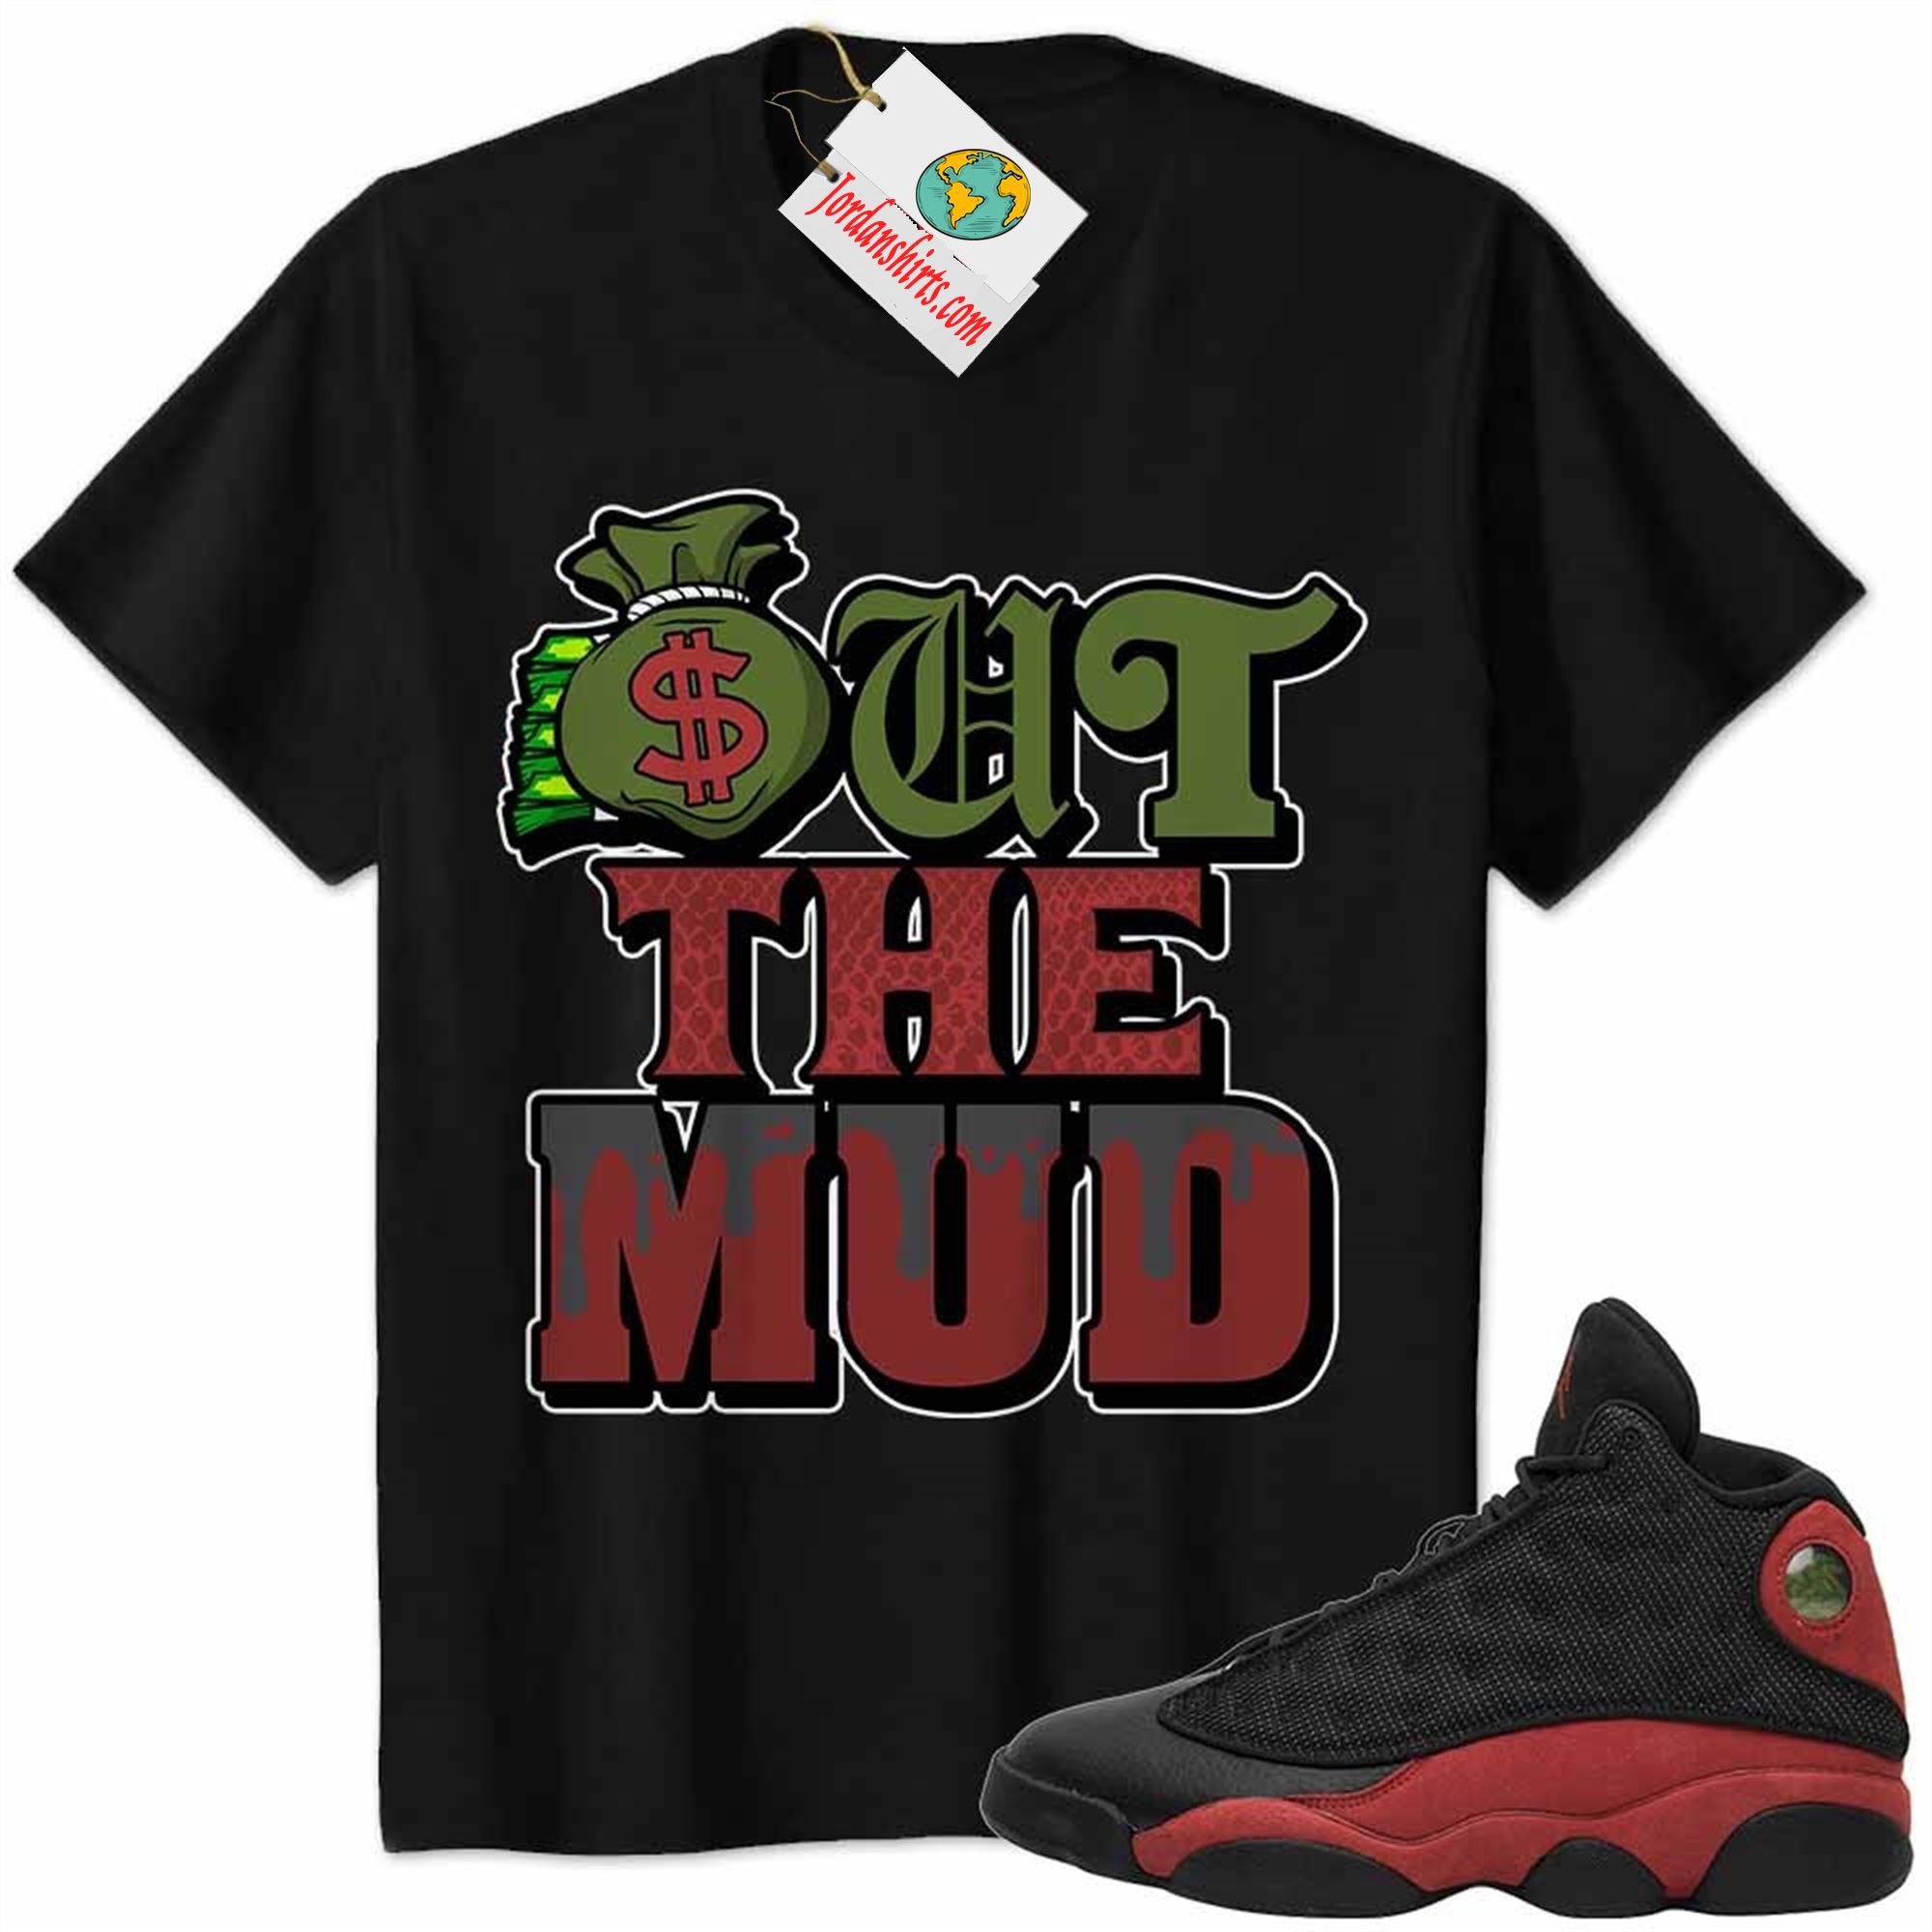 Jordan 13 Shirt, Jordan 13 Bred Shirt Out The Mud Money Bag Black Plus Size Up To 5xl